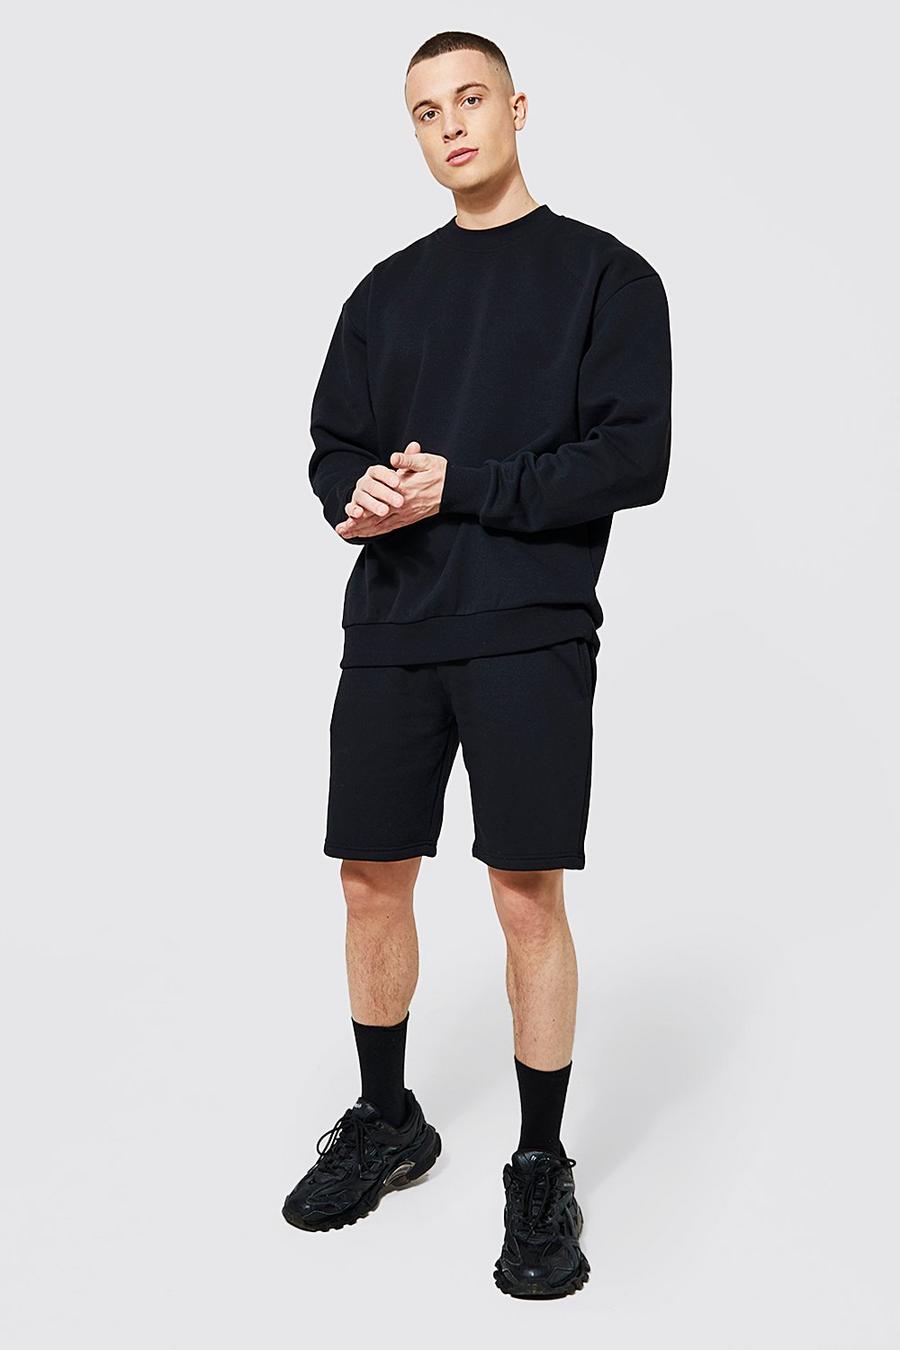 Kurzer Oversize Sweatshirt-Trainingsanzug, Black schwarz